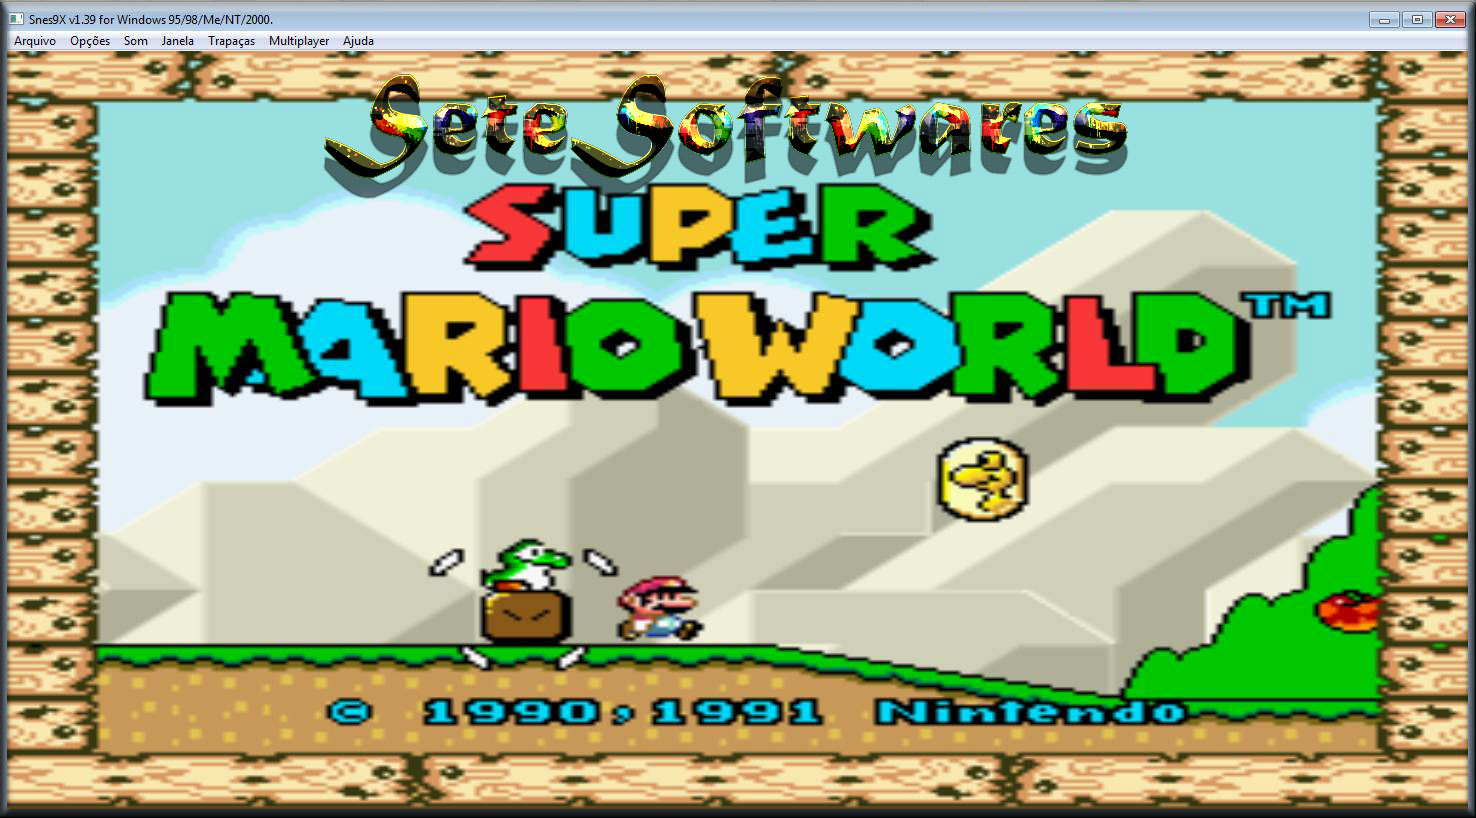 SeteSoftwares: Super Mario World - Rom Snes9x